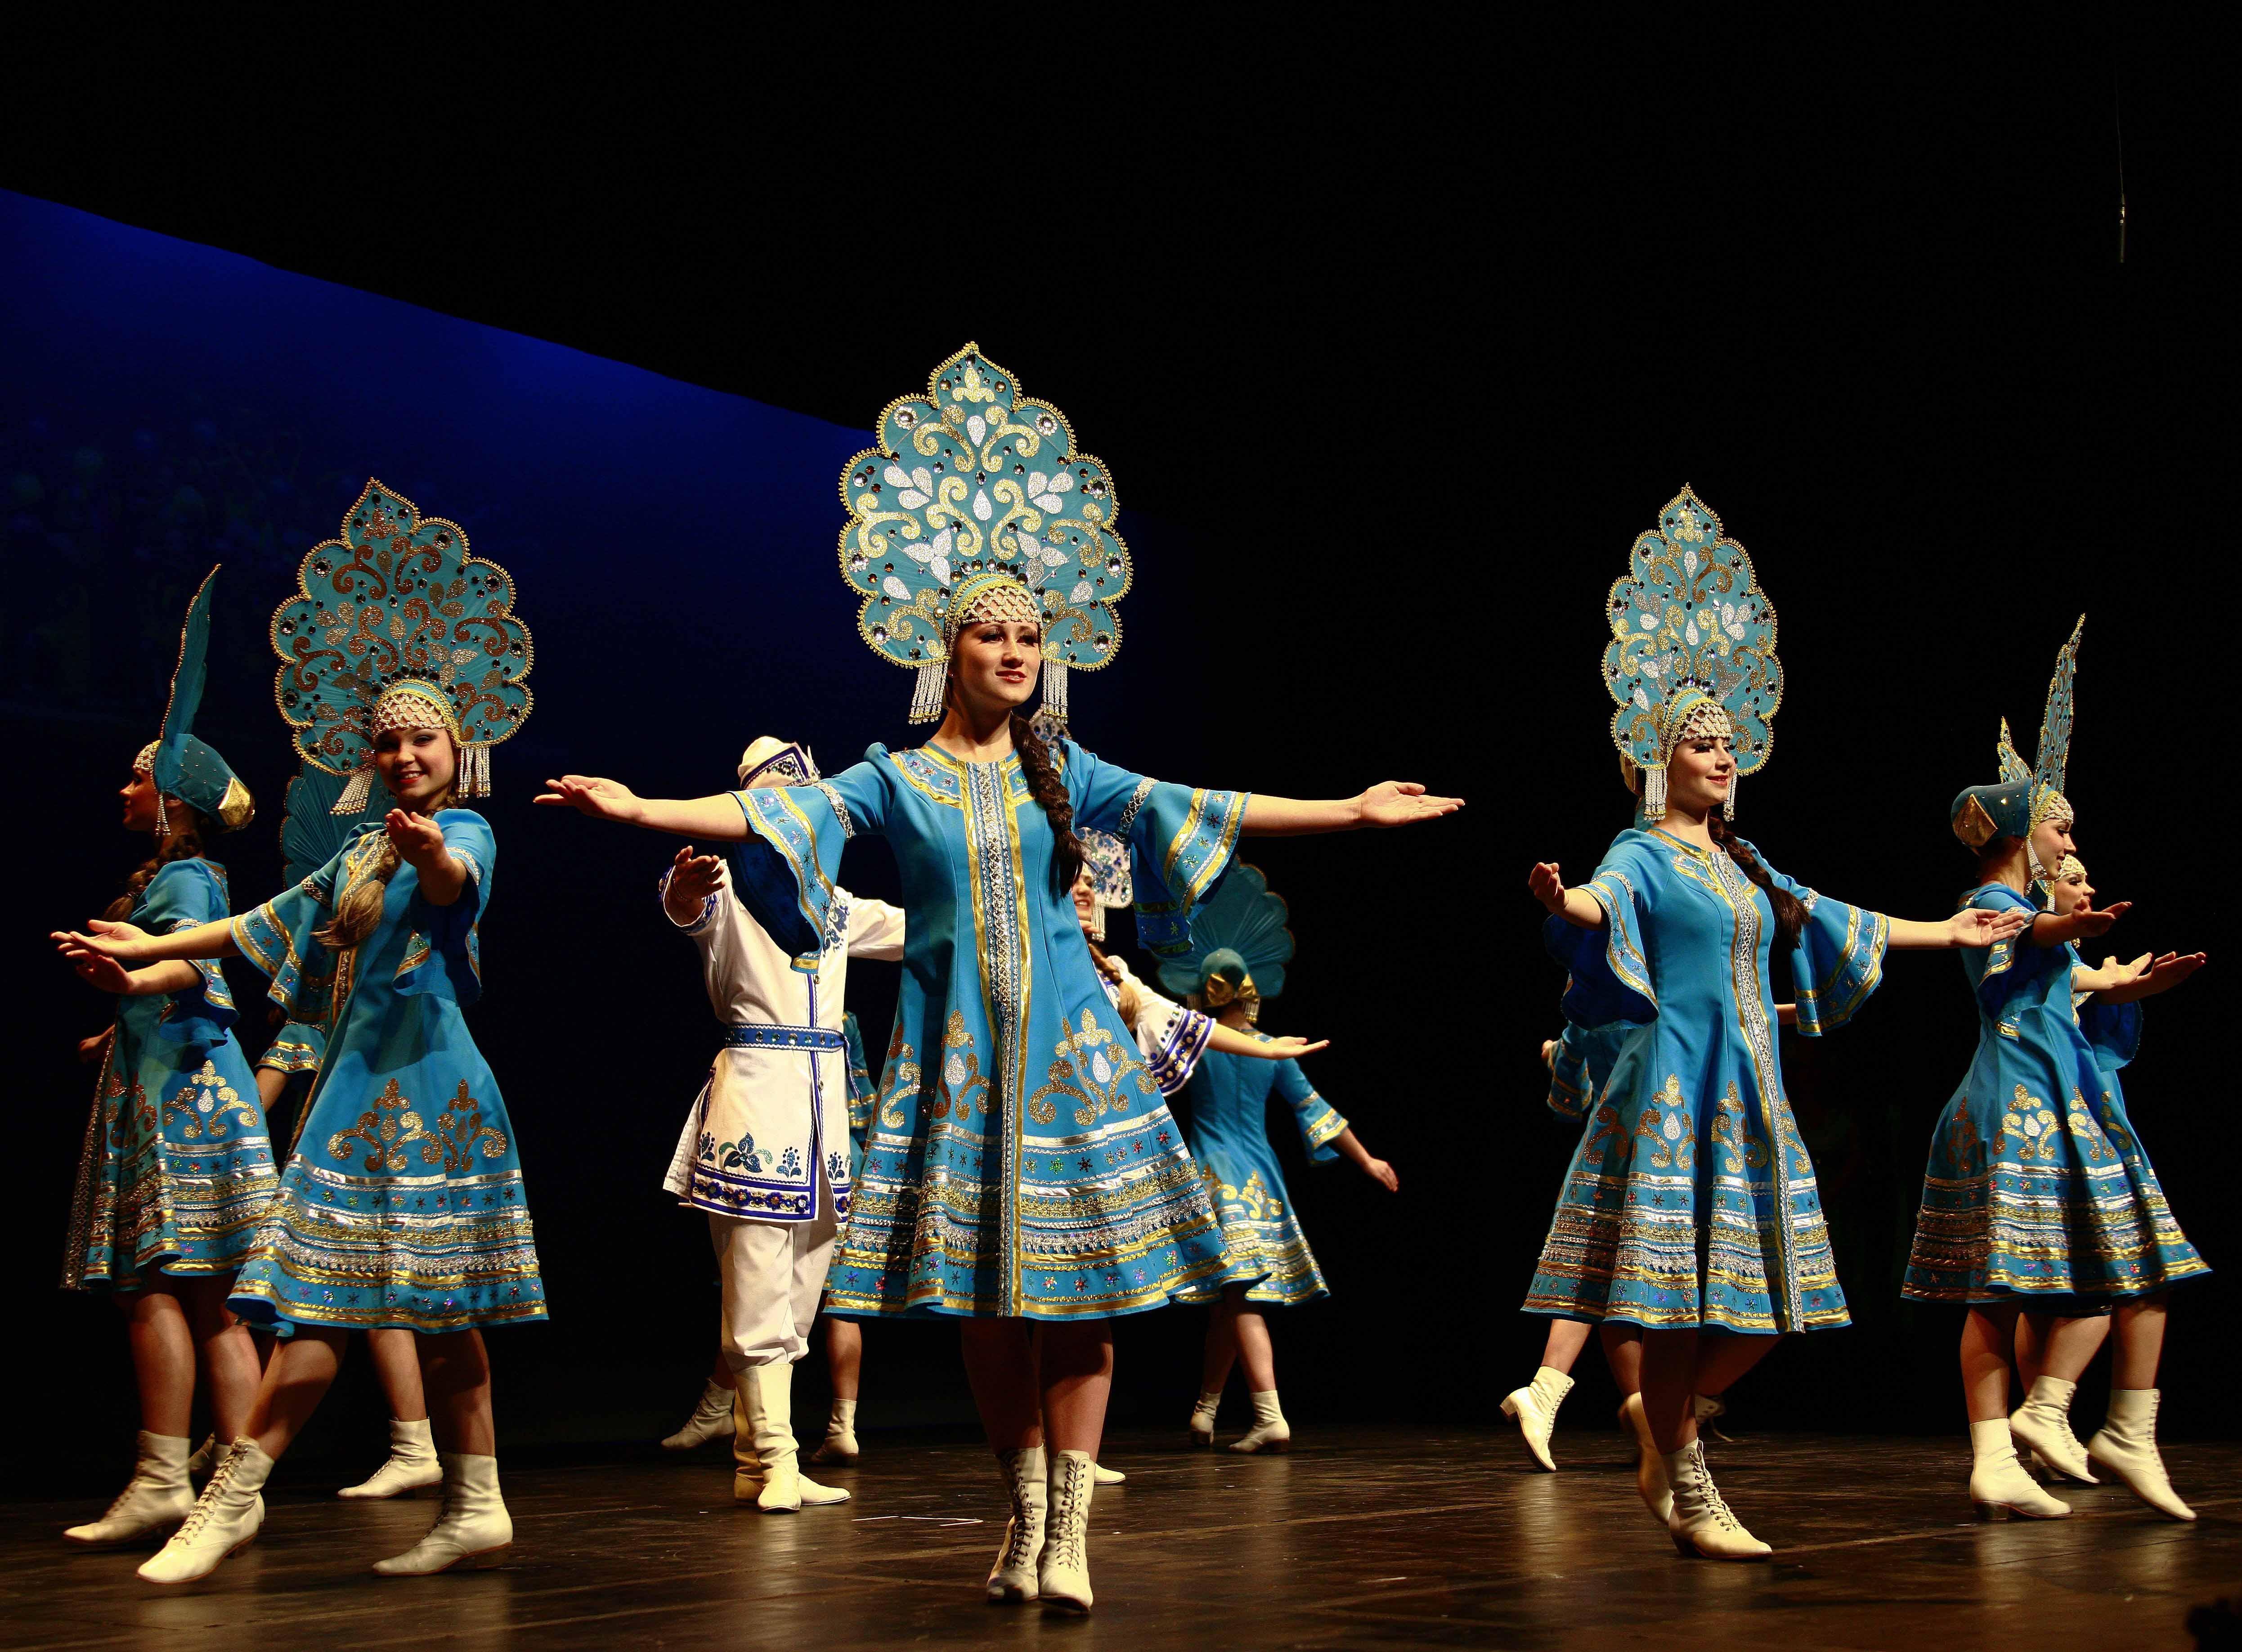 Espectacle de dansa i música folklòriques russes Rússia Multicolor